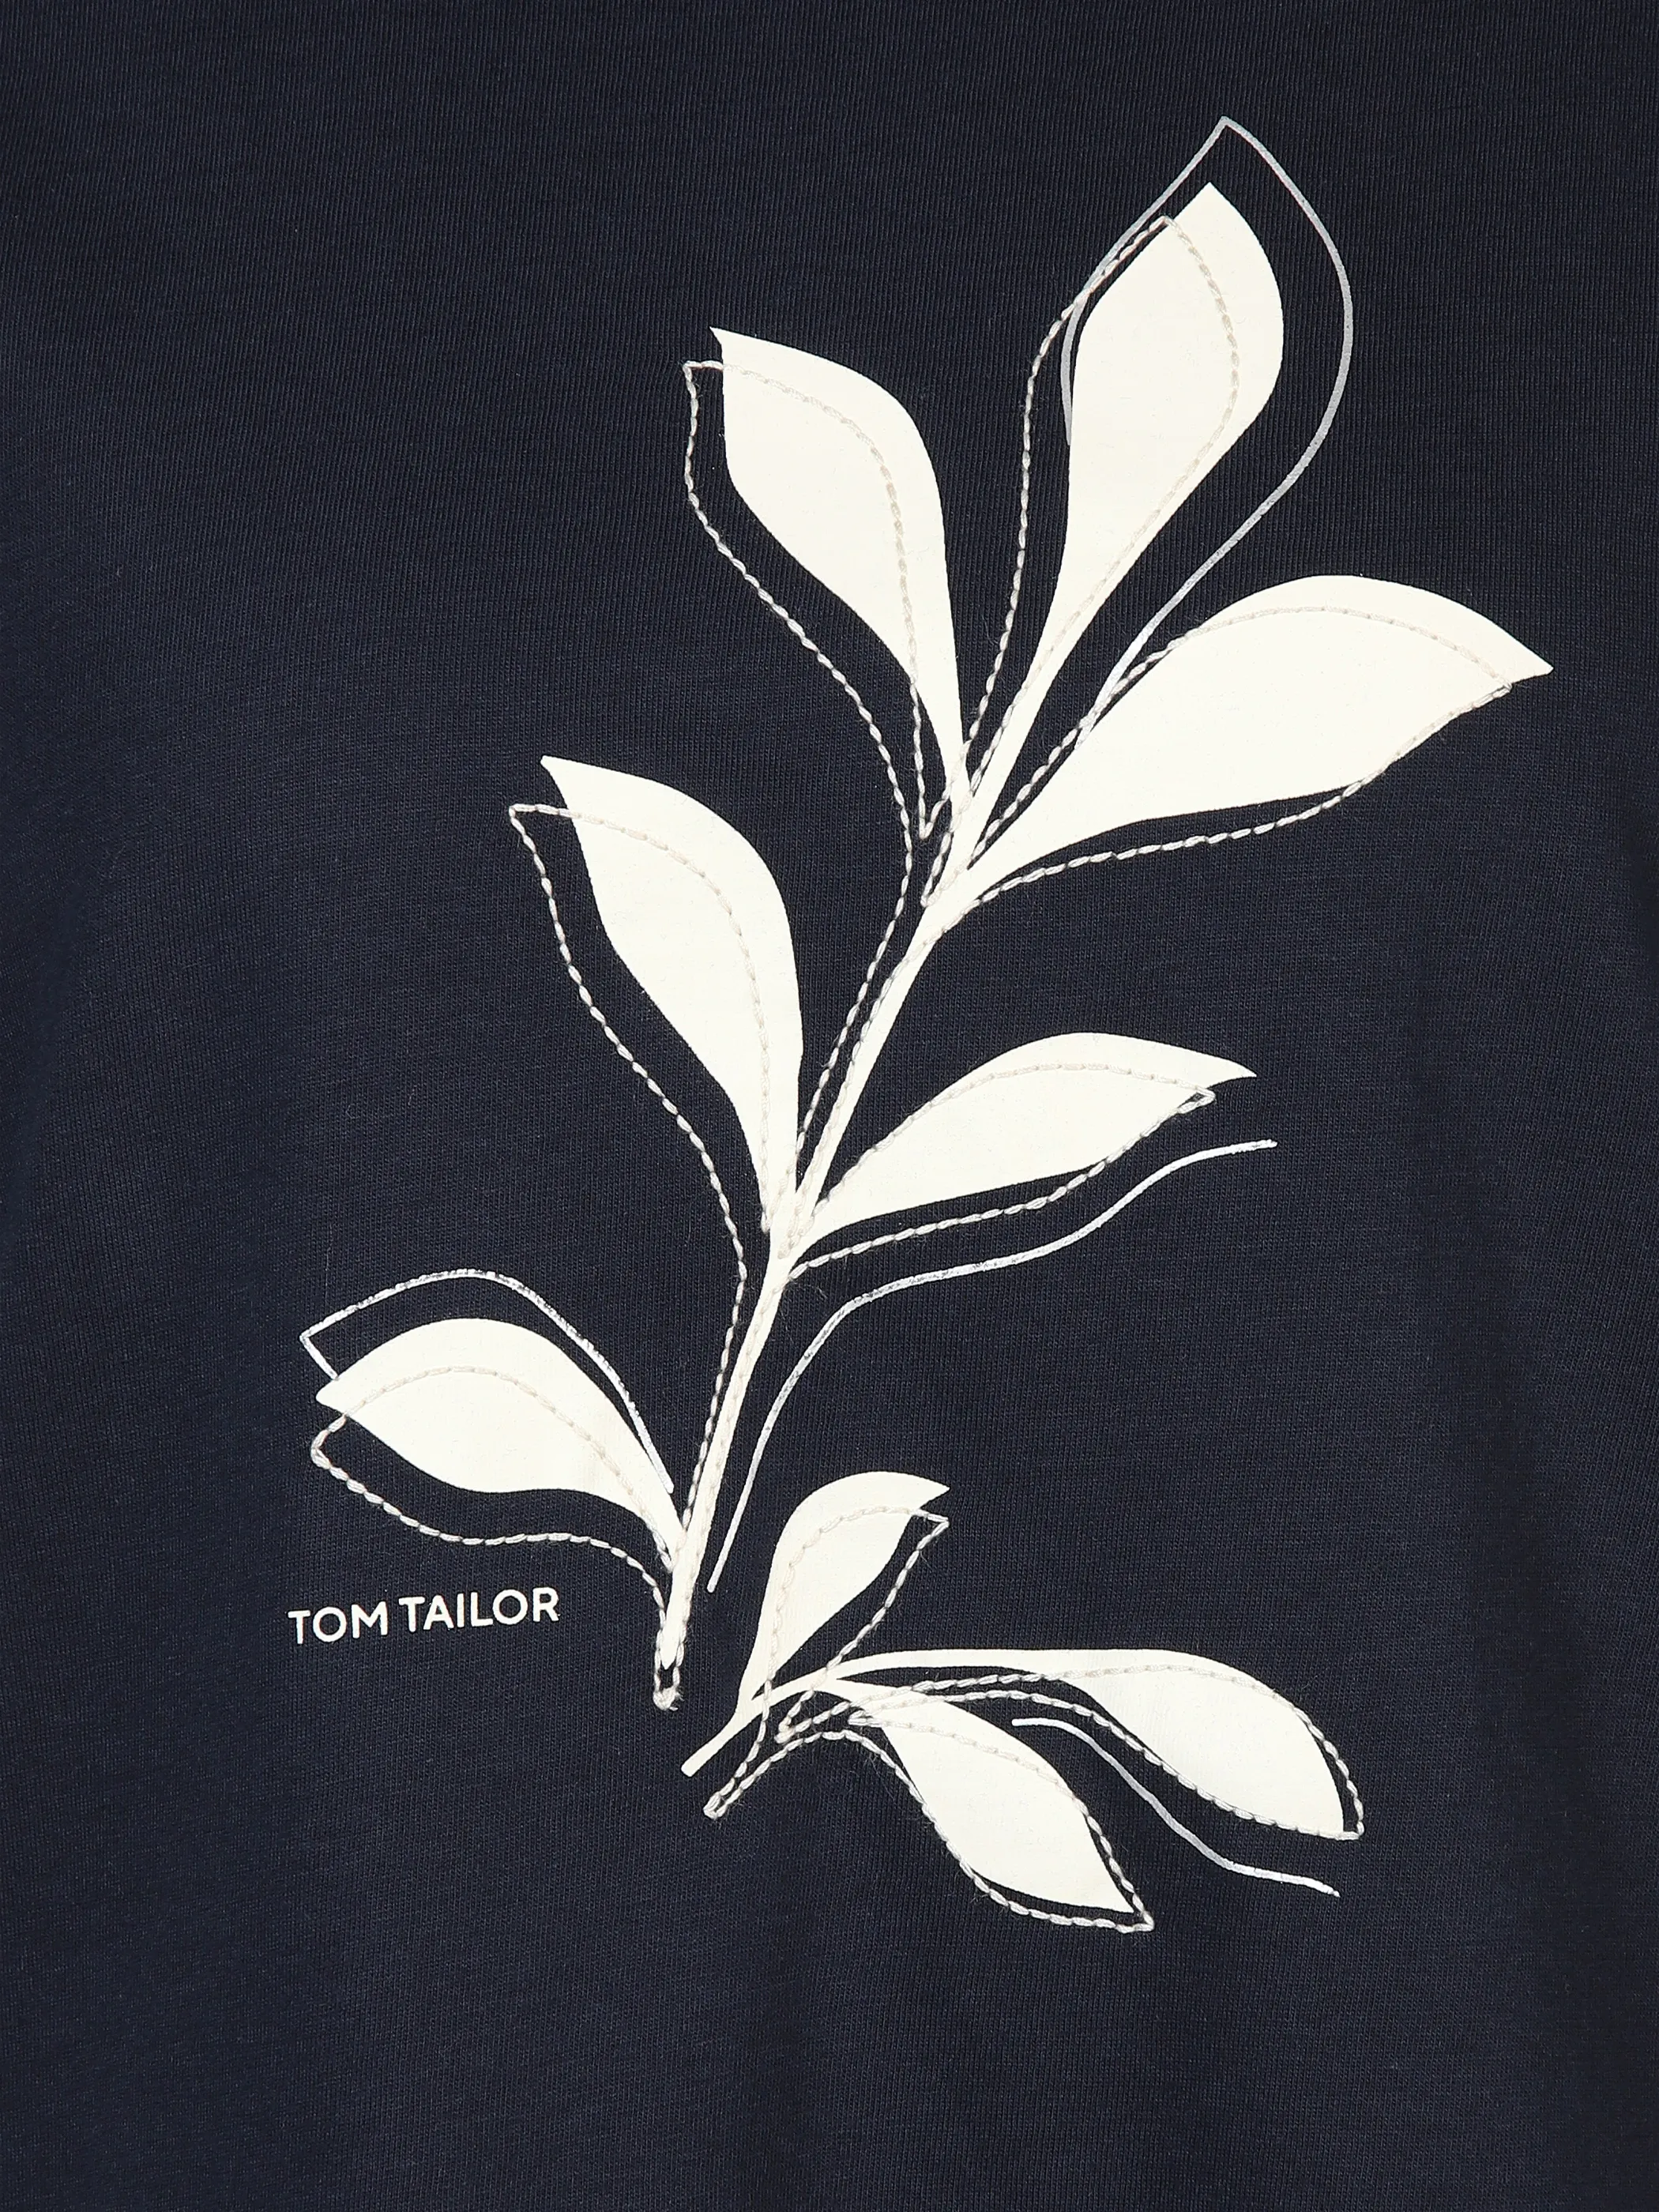 Tom Tailor 1040544 NOS T-shirt crew neck print Blau 890588 10360 3